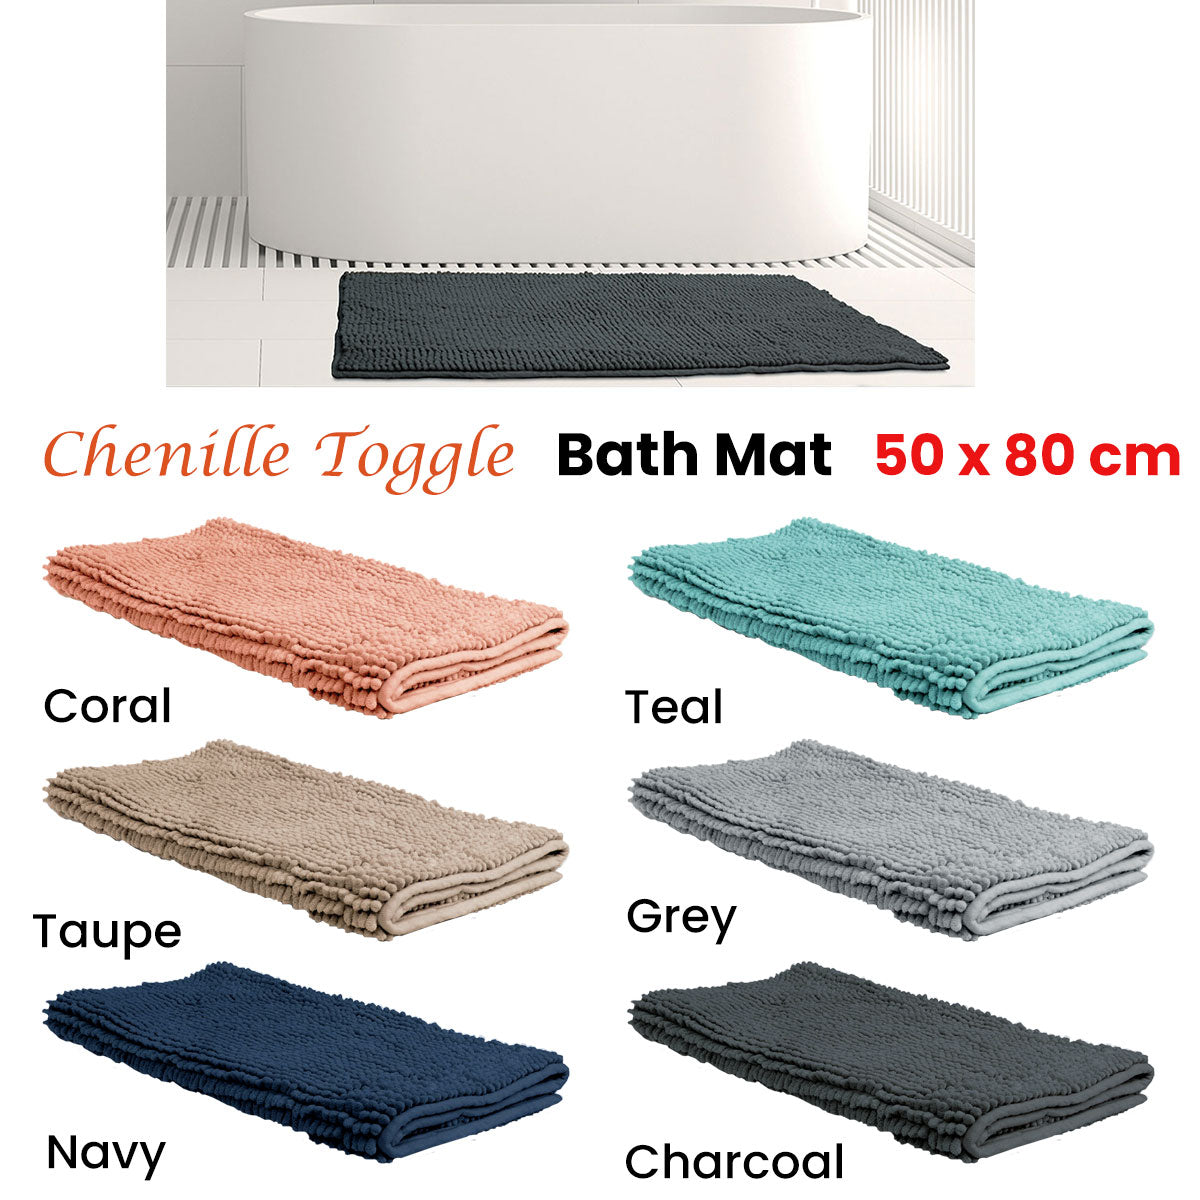 Chenille Toggle Bath Mat 50 x 80cm Charcoal